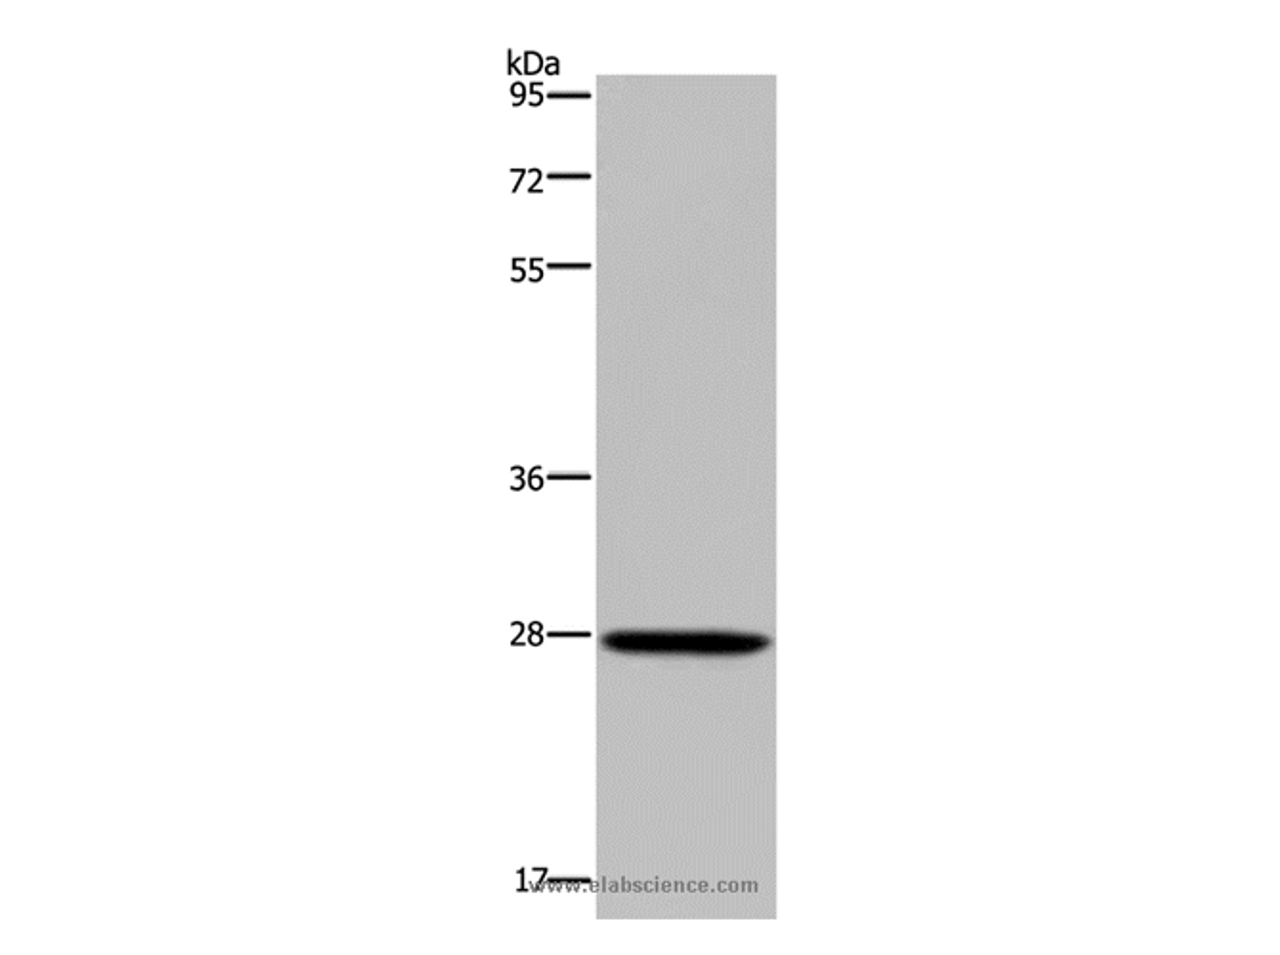 Western Blot analysis of Mouse spleen tissue using KLK14 Polyclonal Antibody at dilution of 1:300